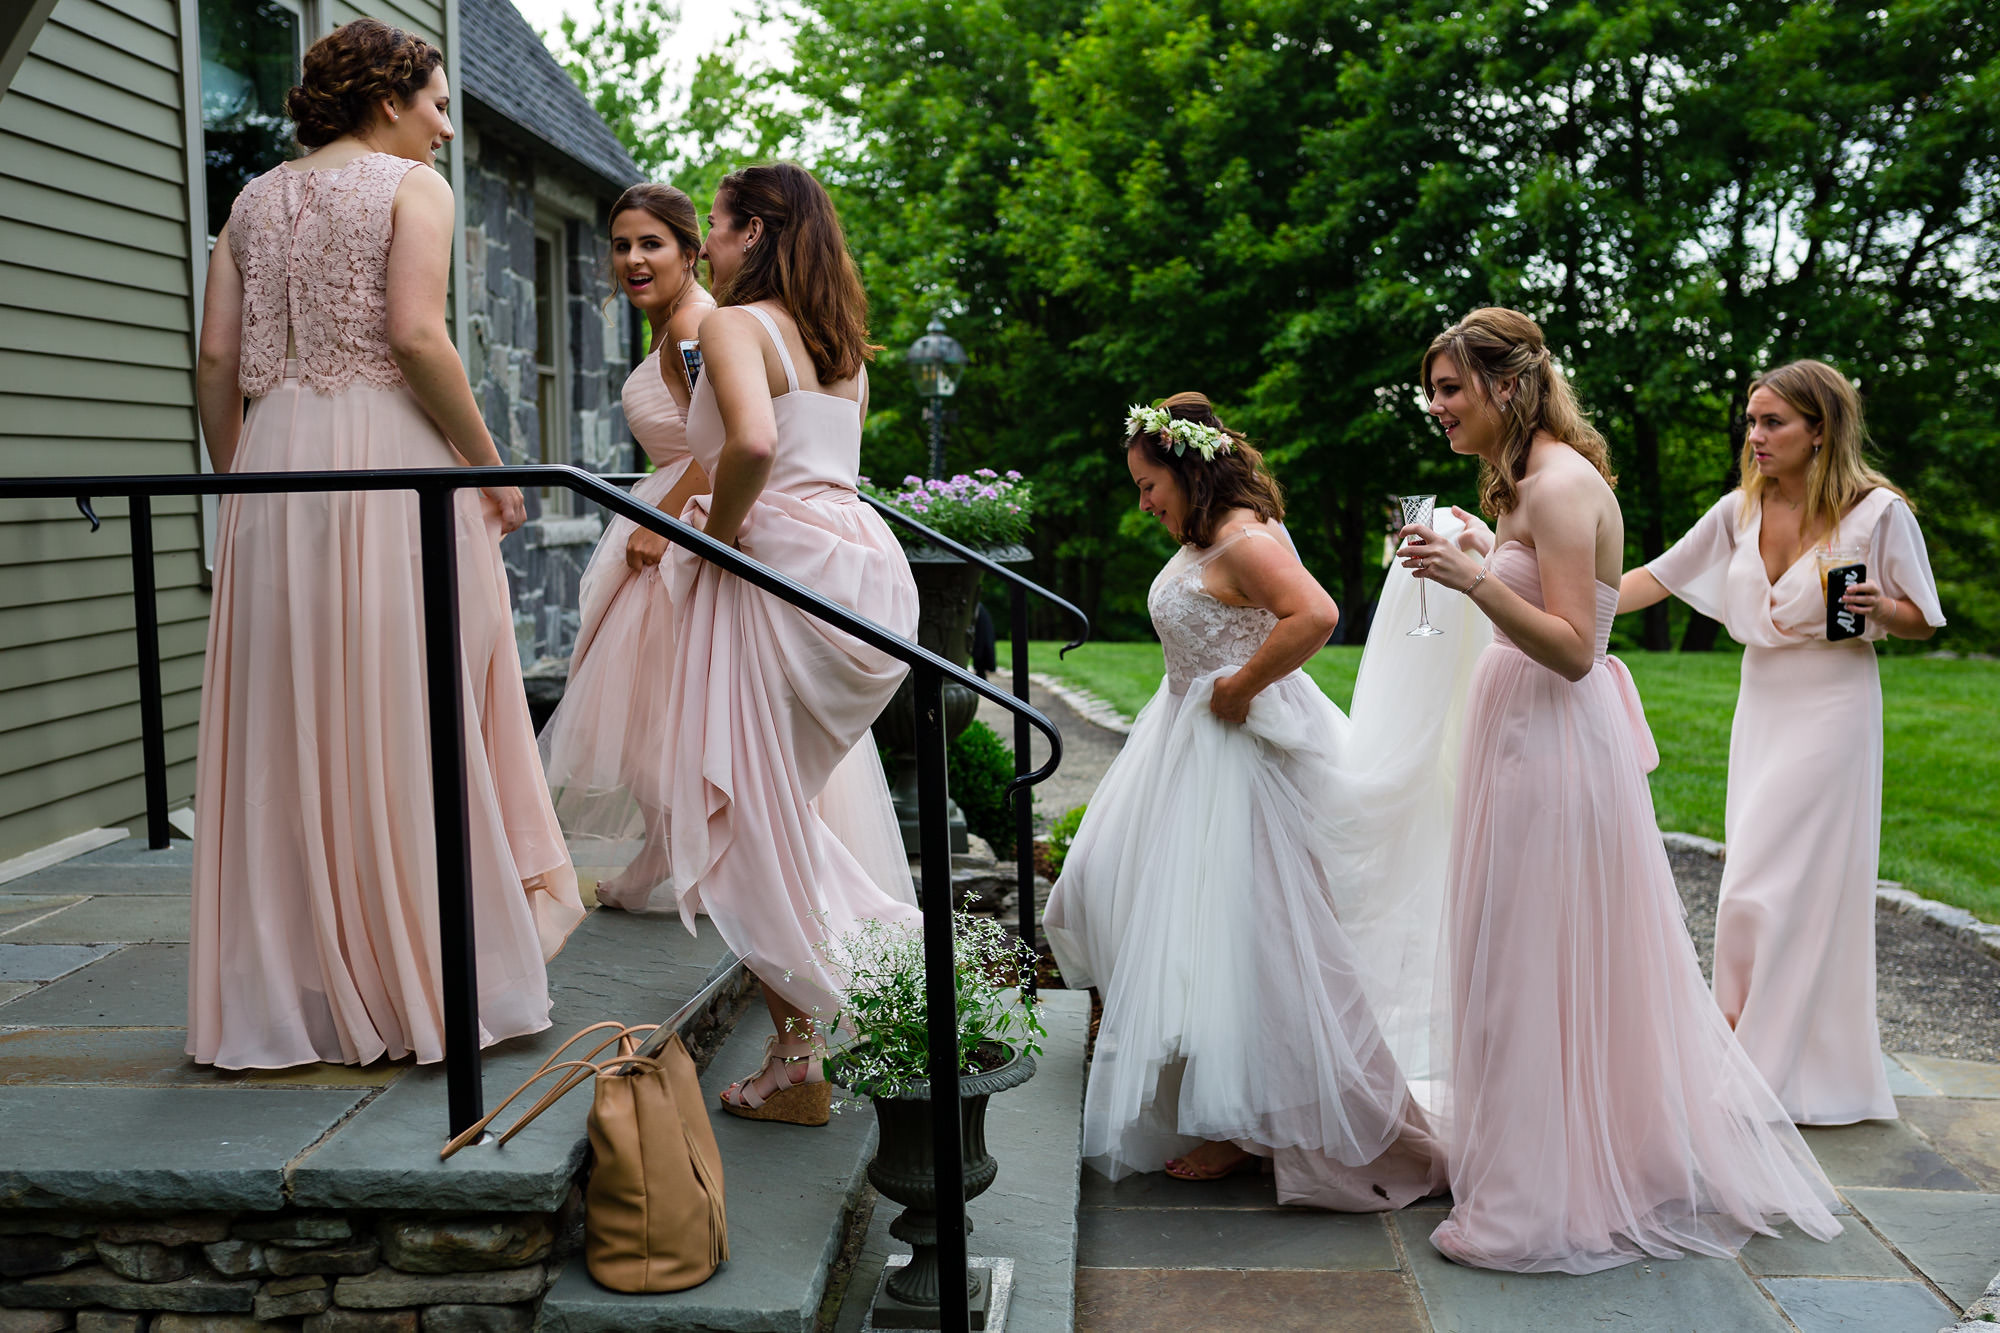 The bridesmaids help the bride bustle her wedding dress